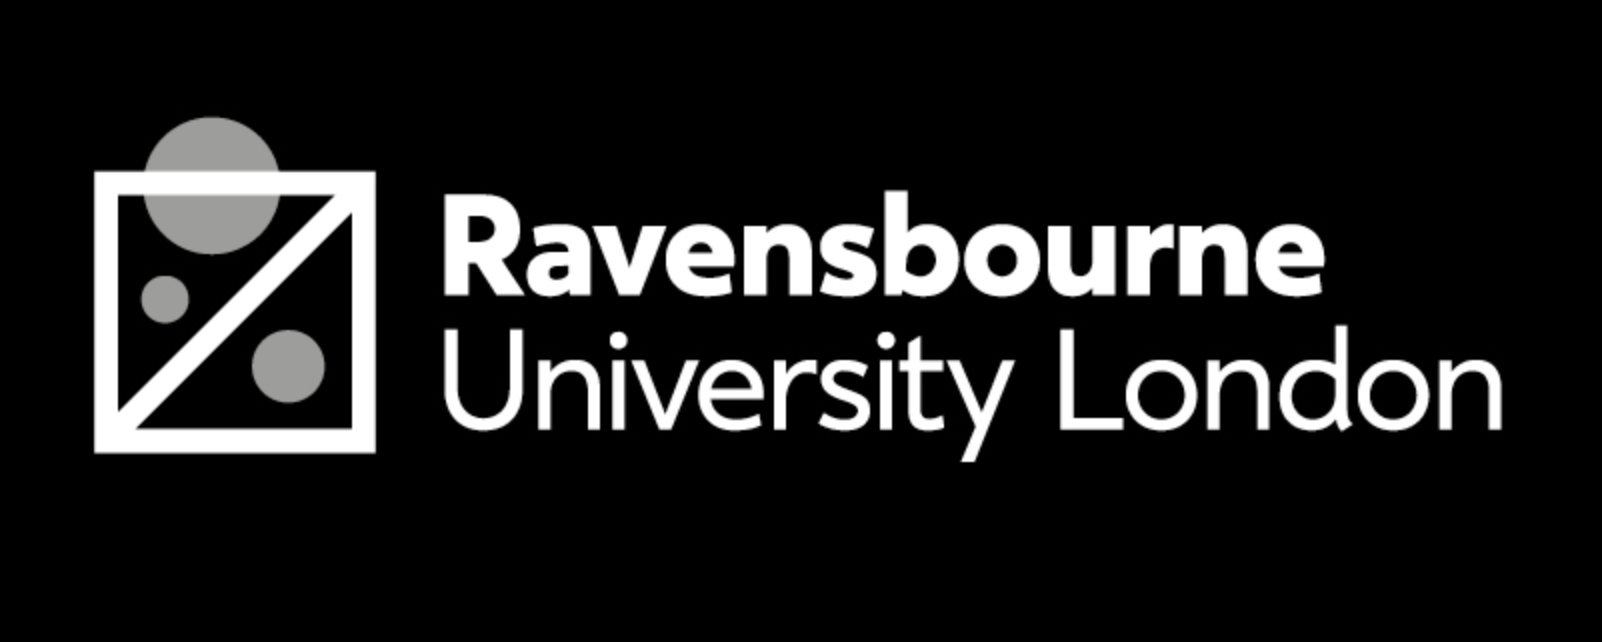 ravensbourne logo